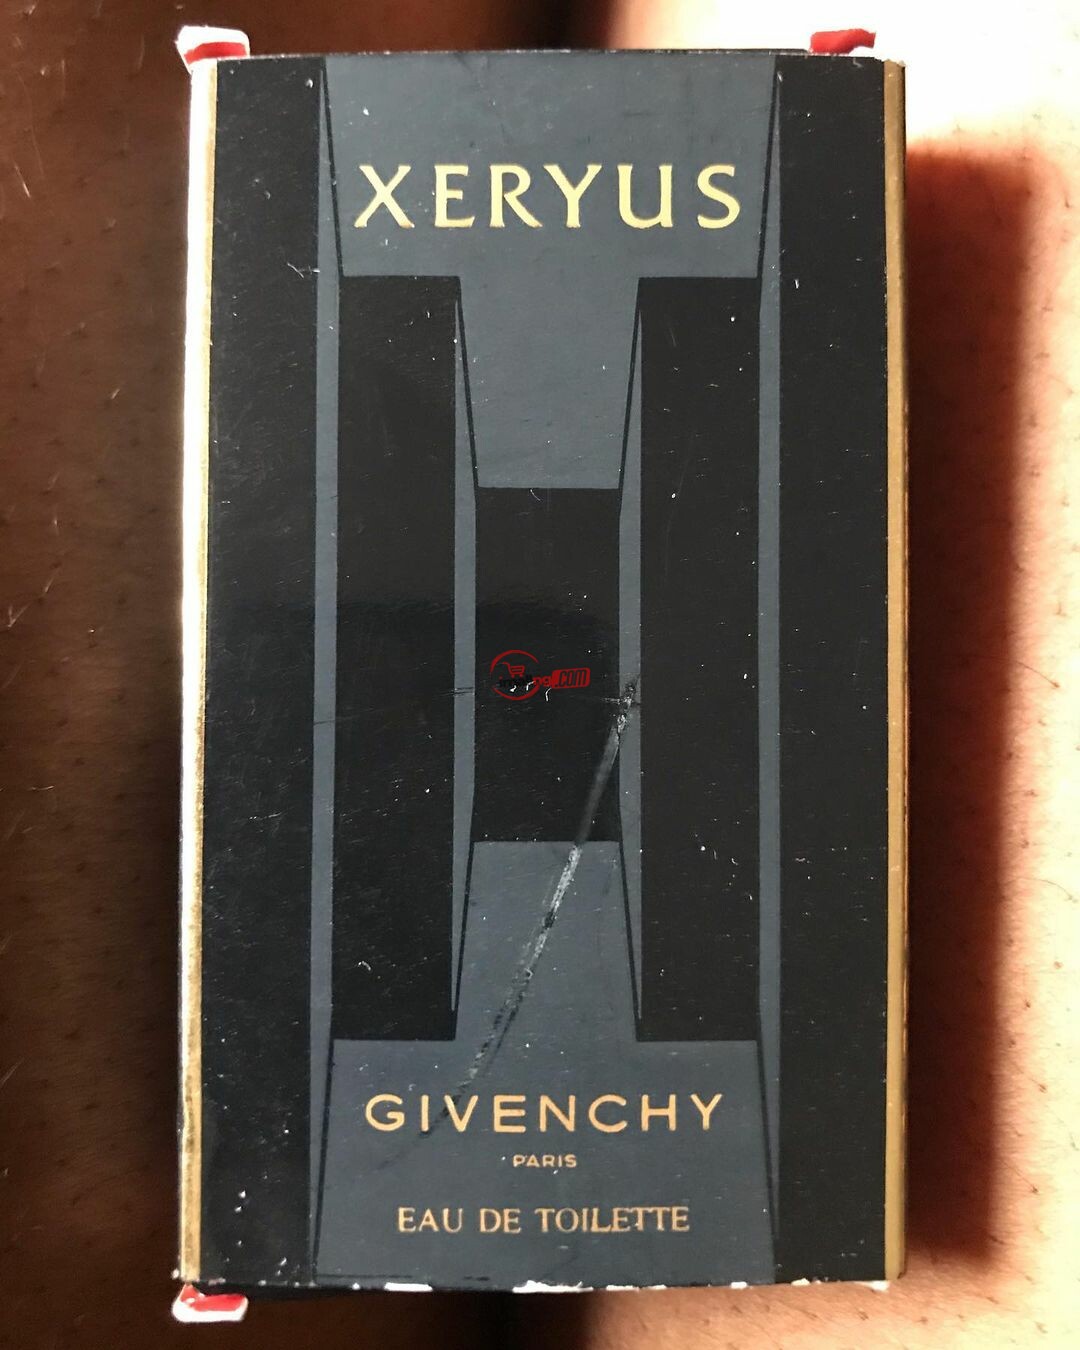 Xeryus perfume